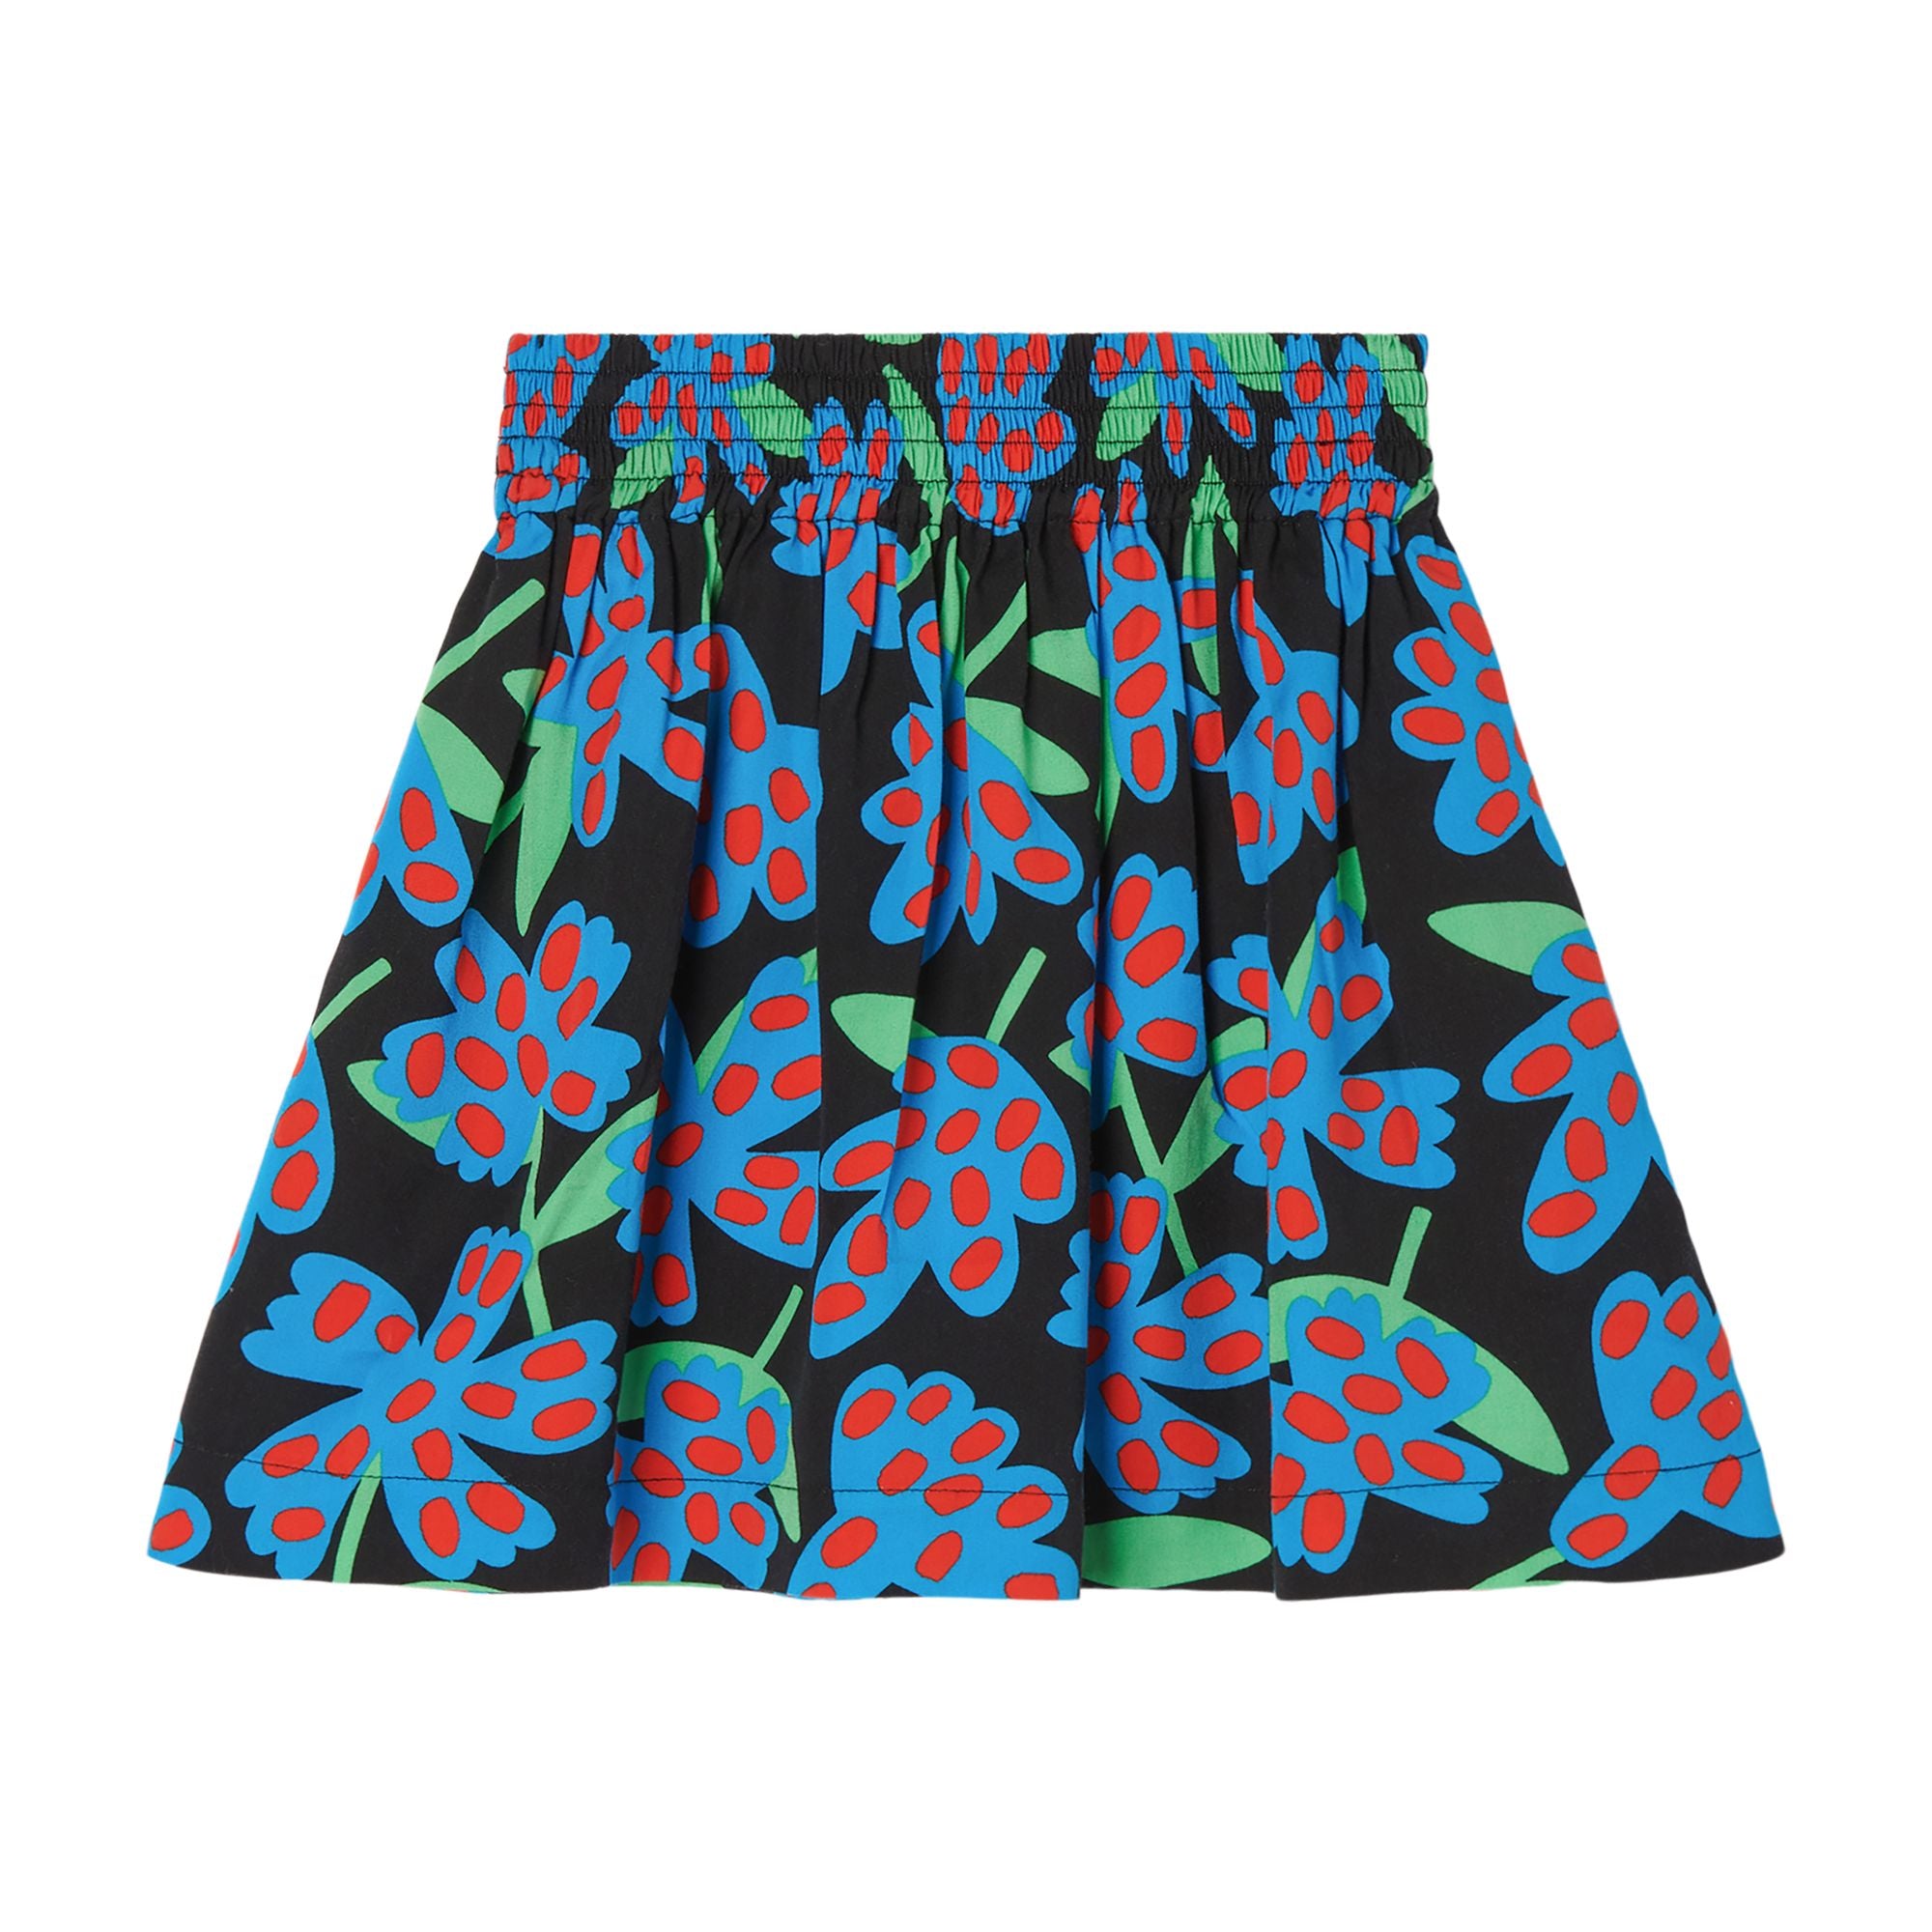 Stella McCartney - Multi Spotty Flowers Skirt